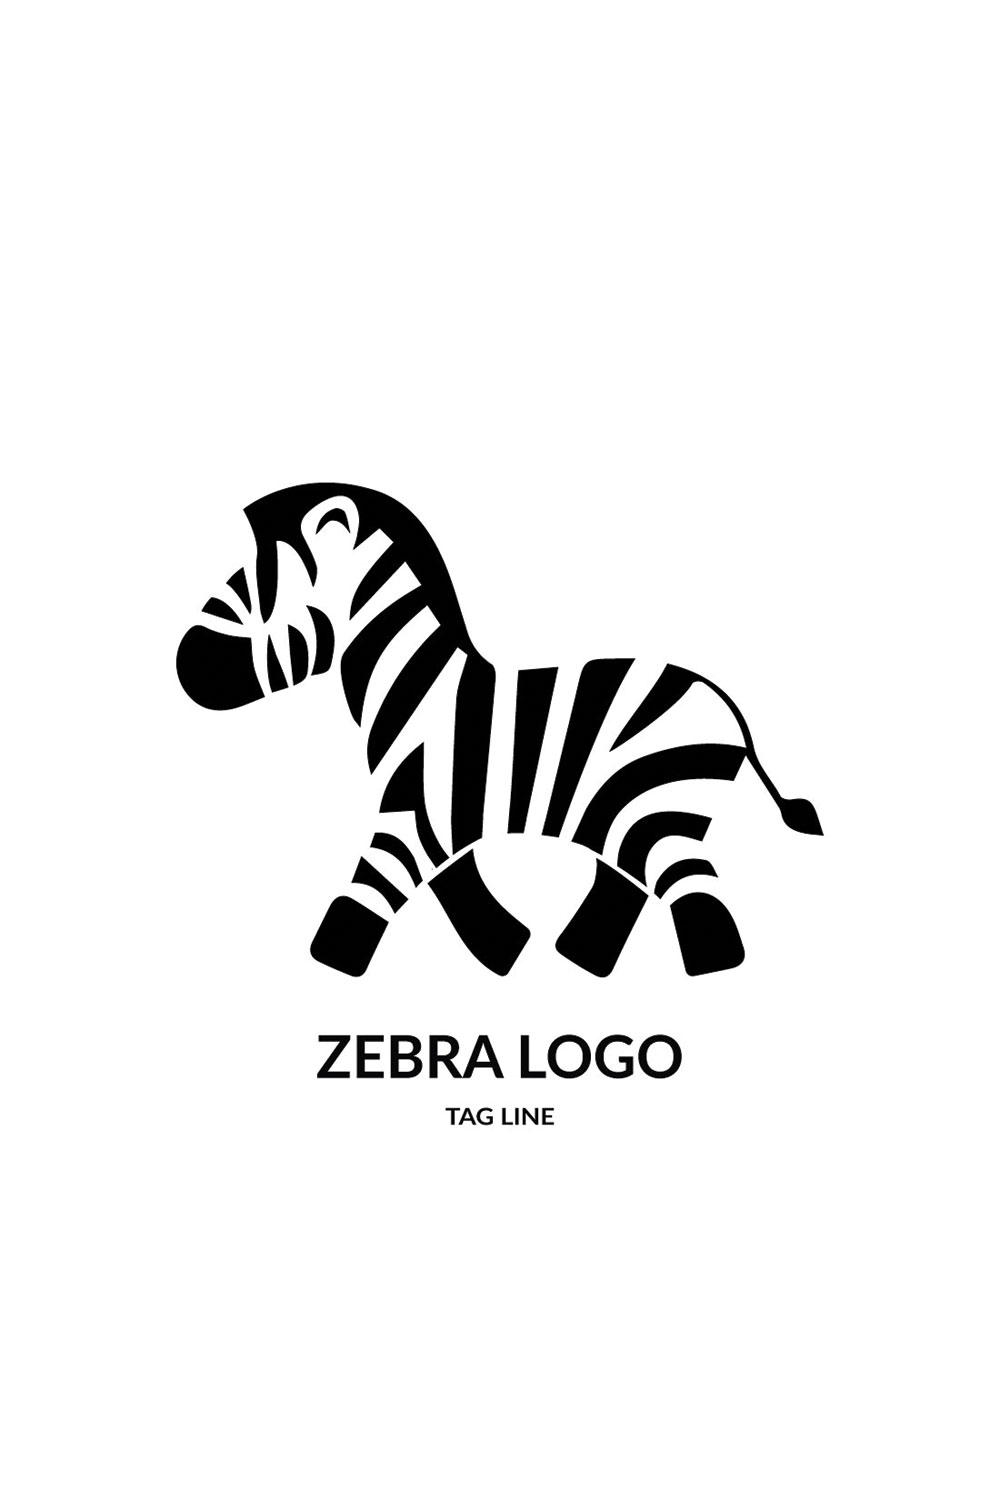 Premium Vector | Set of zebra logo design